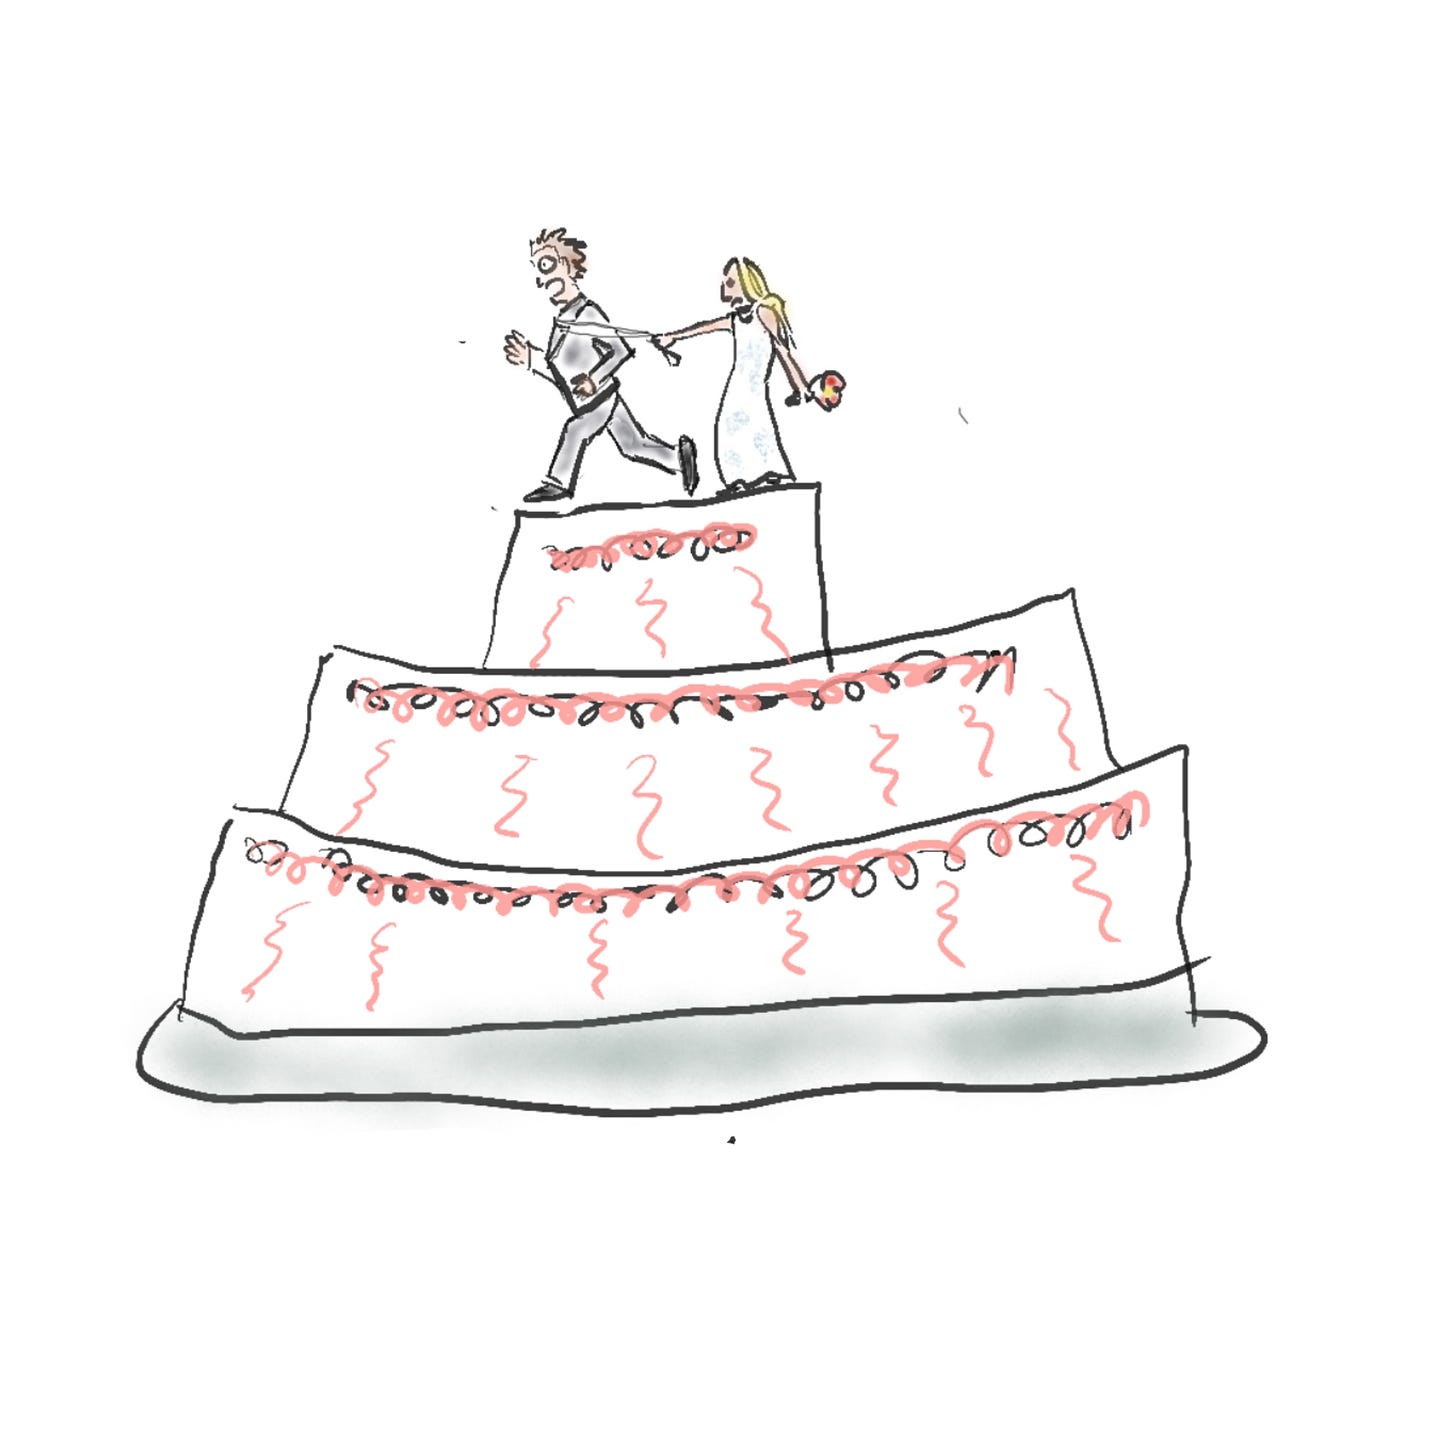 Groom runs away from bride on wedding cake